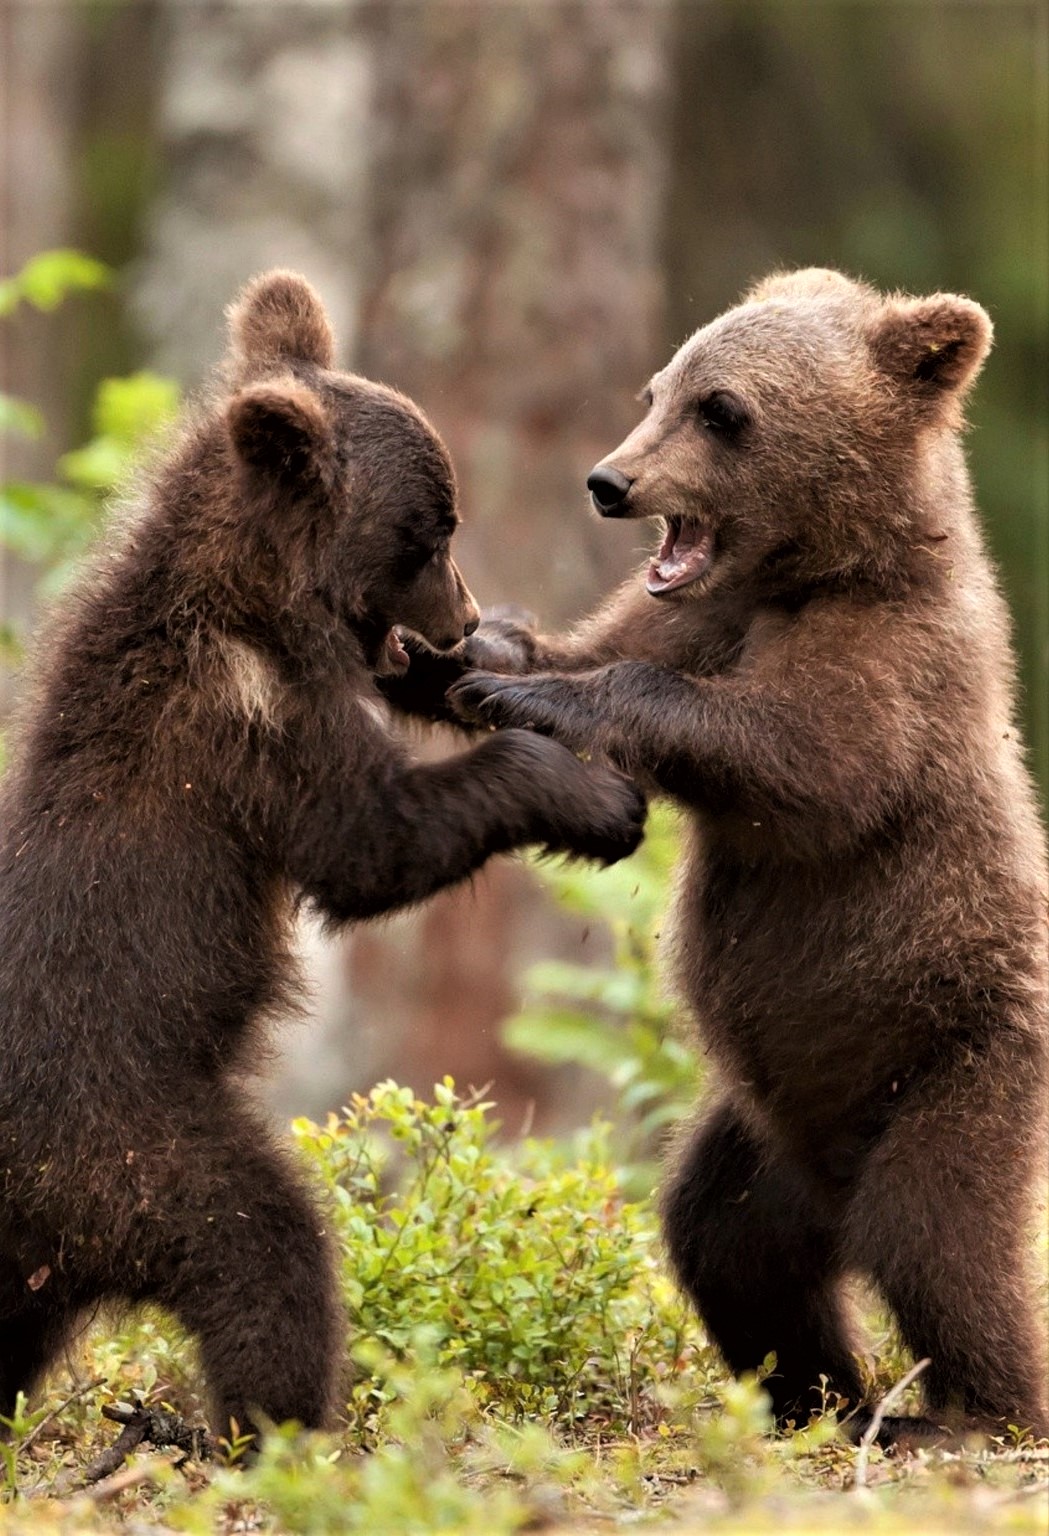 Young bear siblings play.